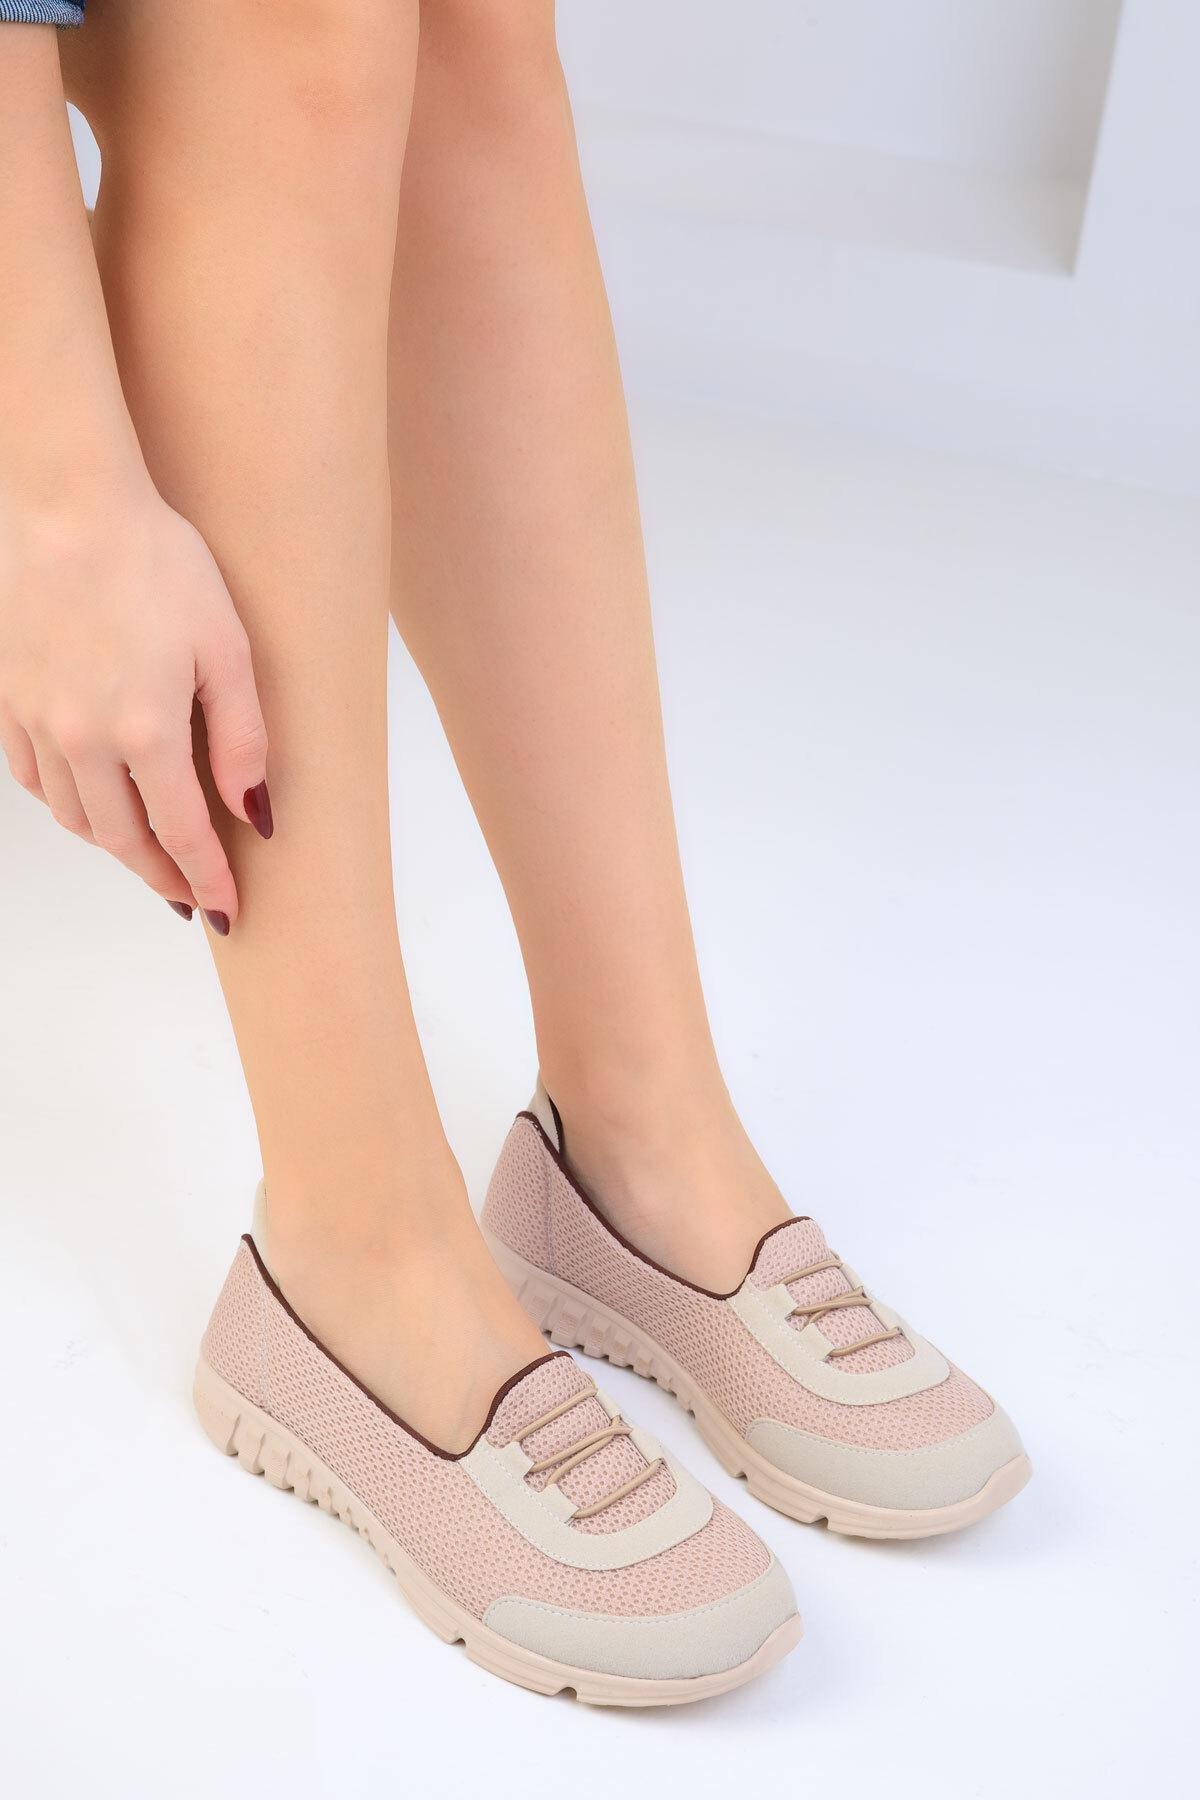 SOHO - Beige Slip-On Casual Shoes